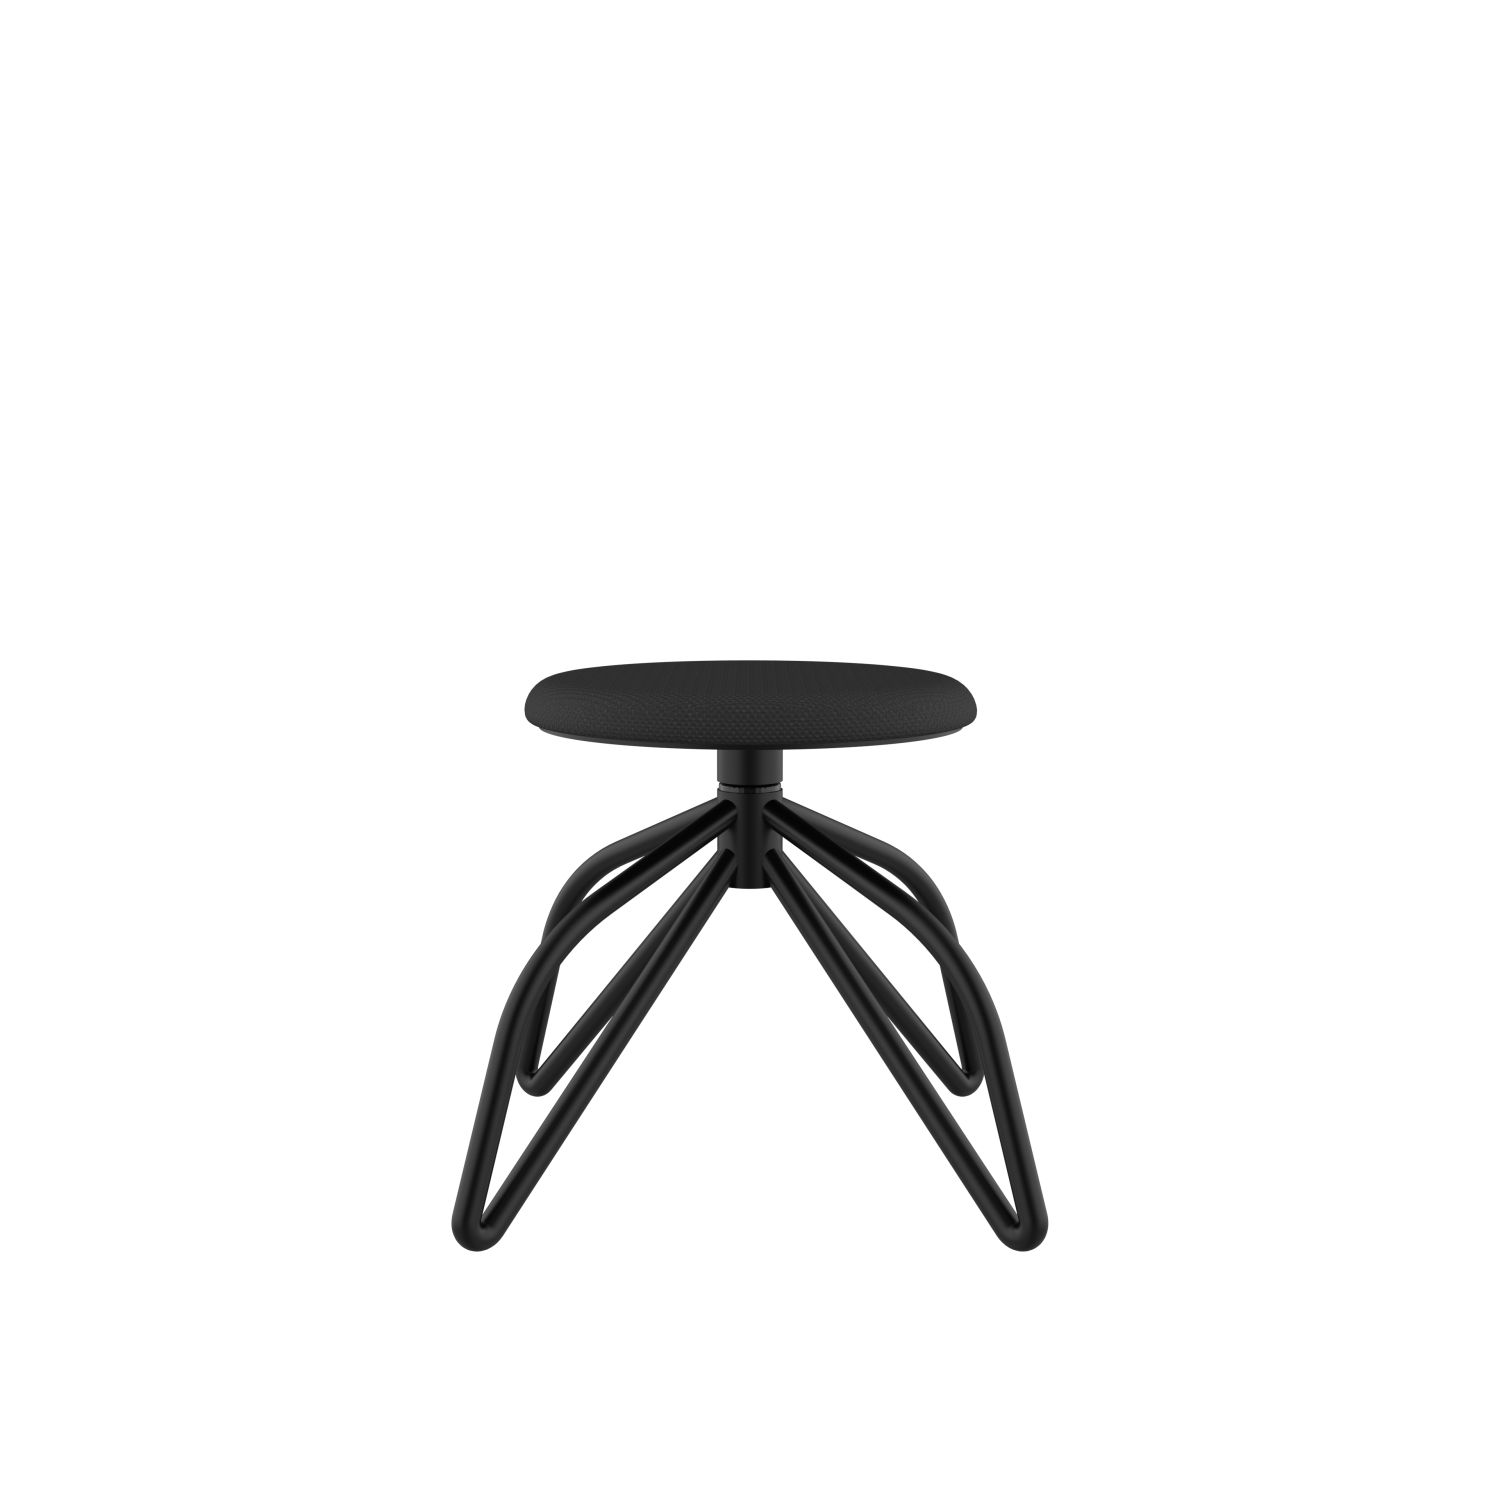 lensvelt powerhouse company coquille stool havana black 090 black ral9005 hard leg ends